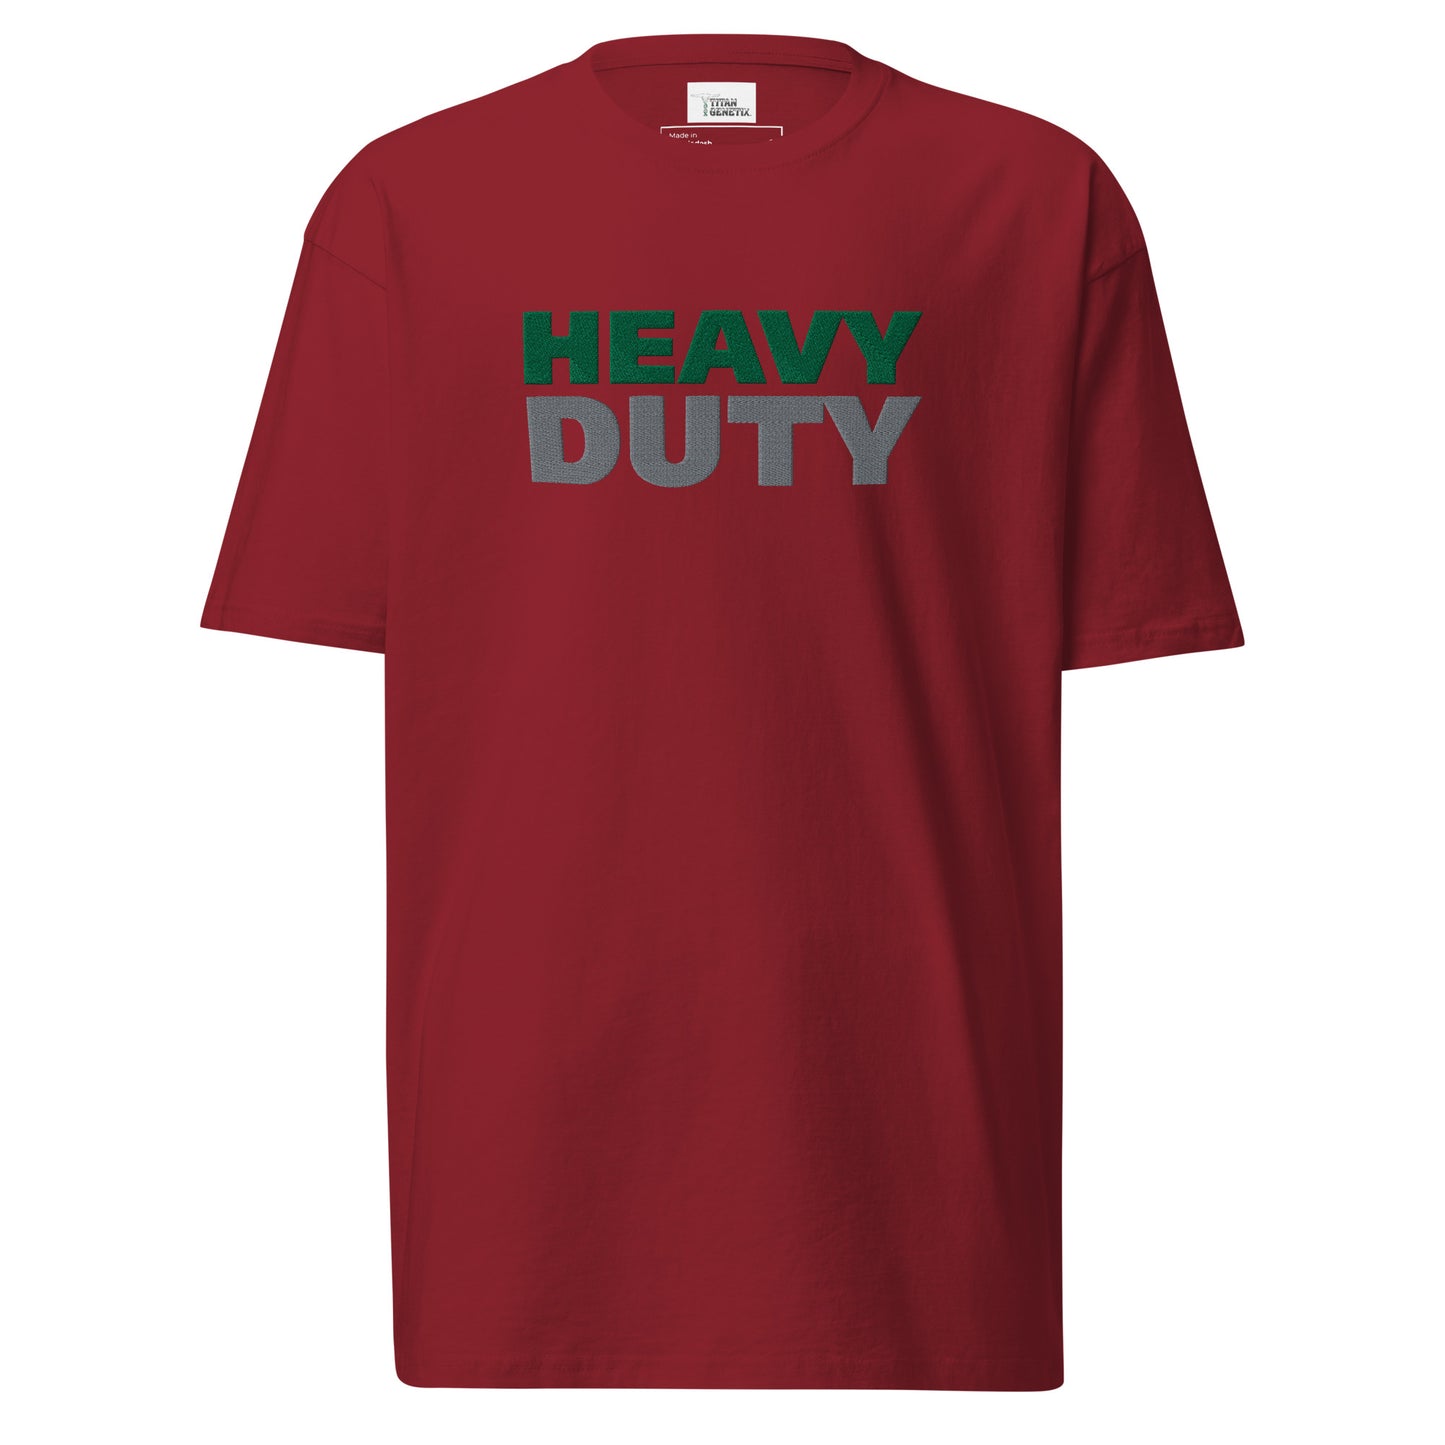 Heavy Duty - Men’s Premium Tee